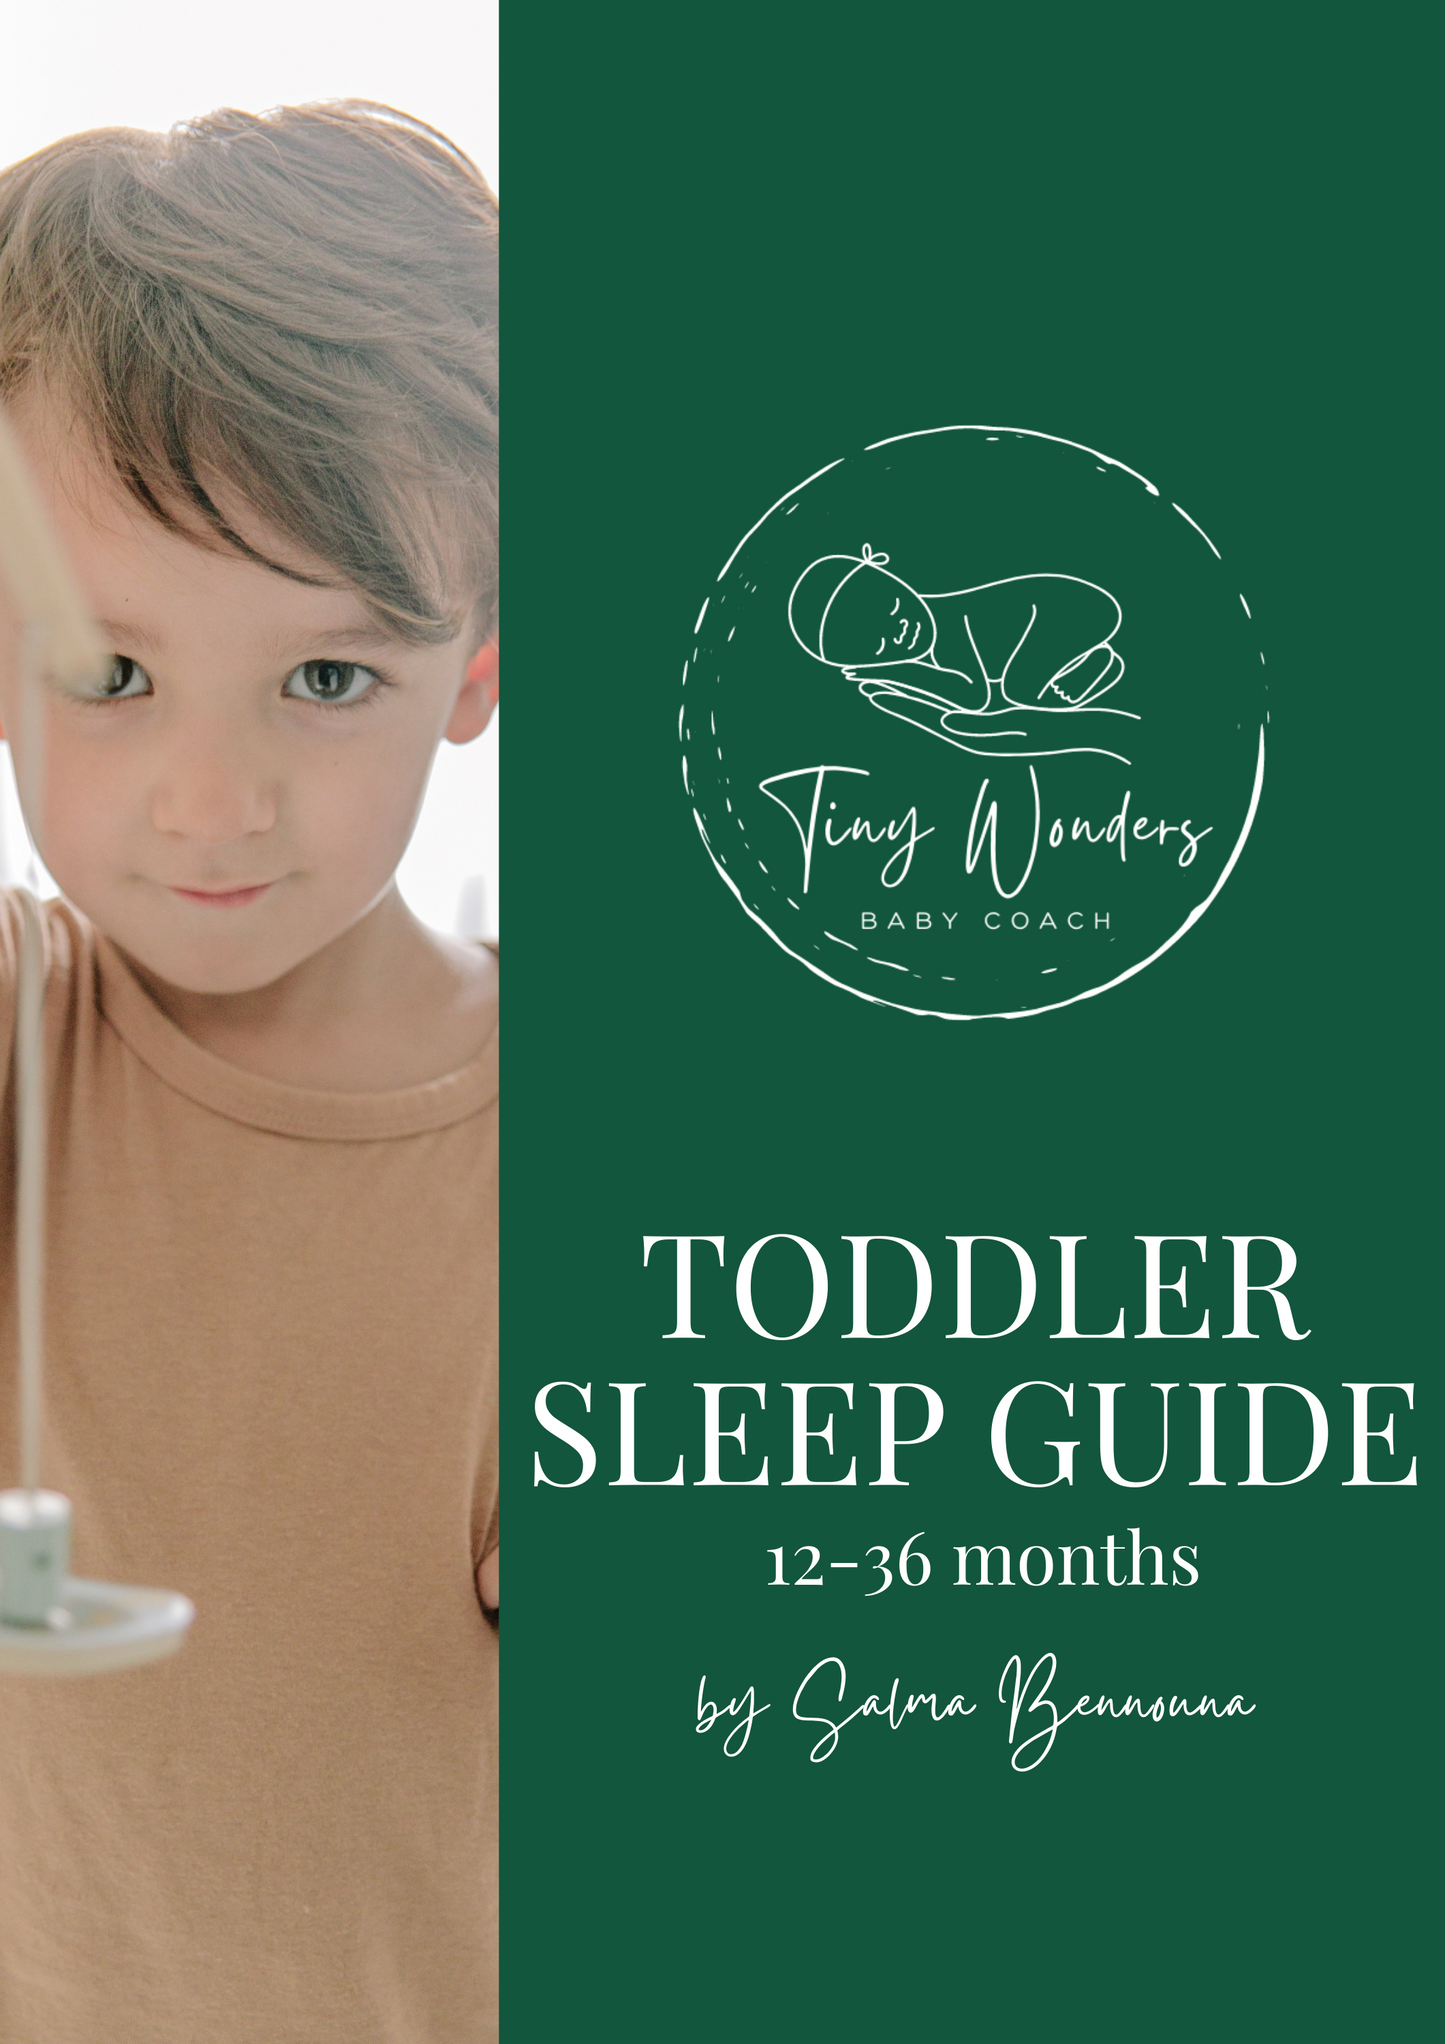 Toddler Sleep Guide 12-36 months - PDF Download